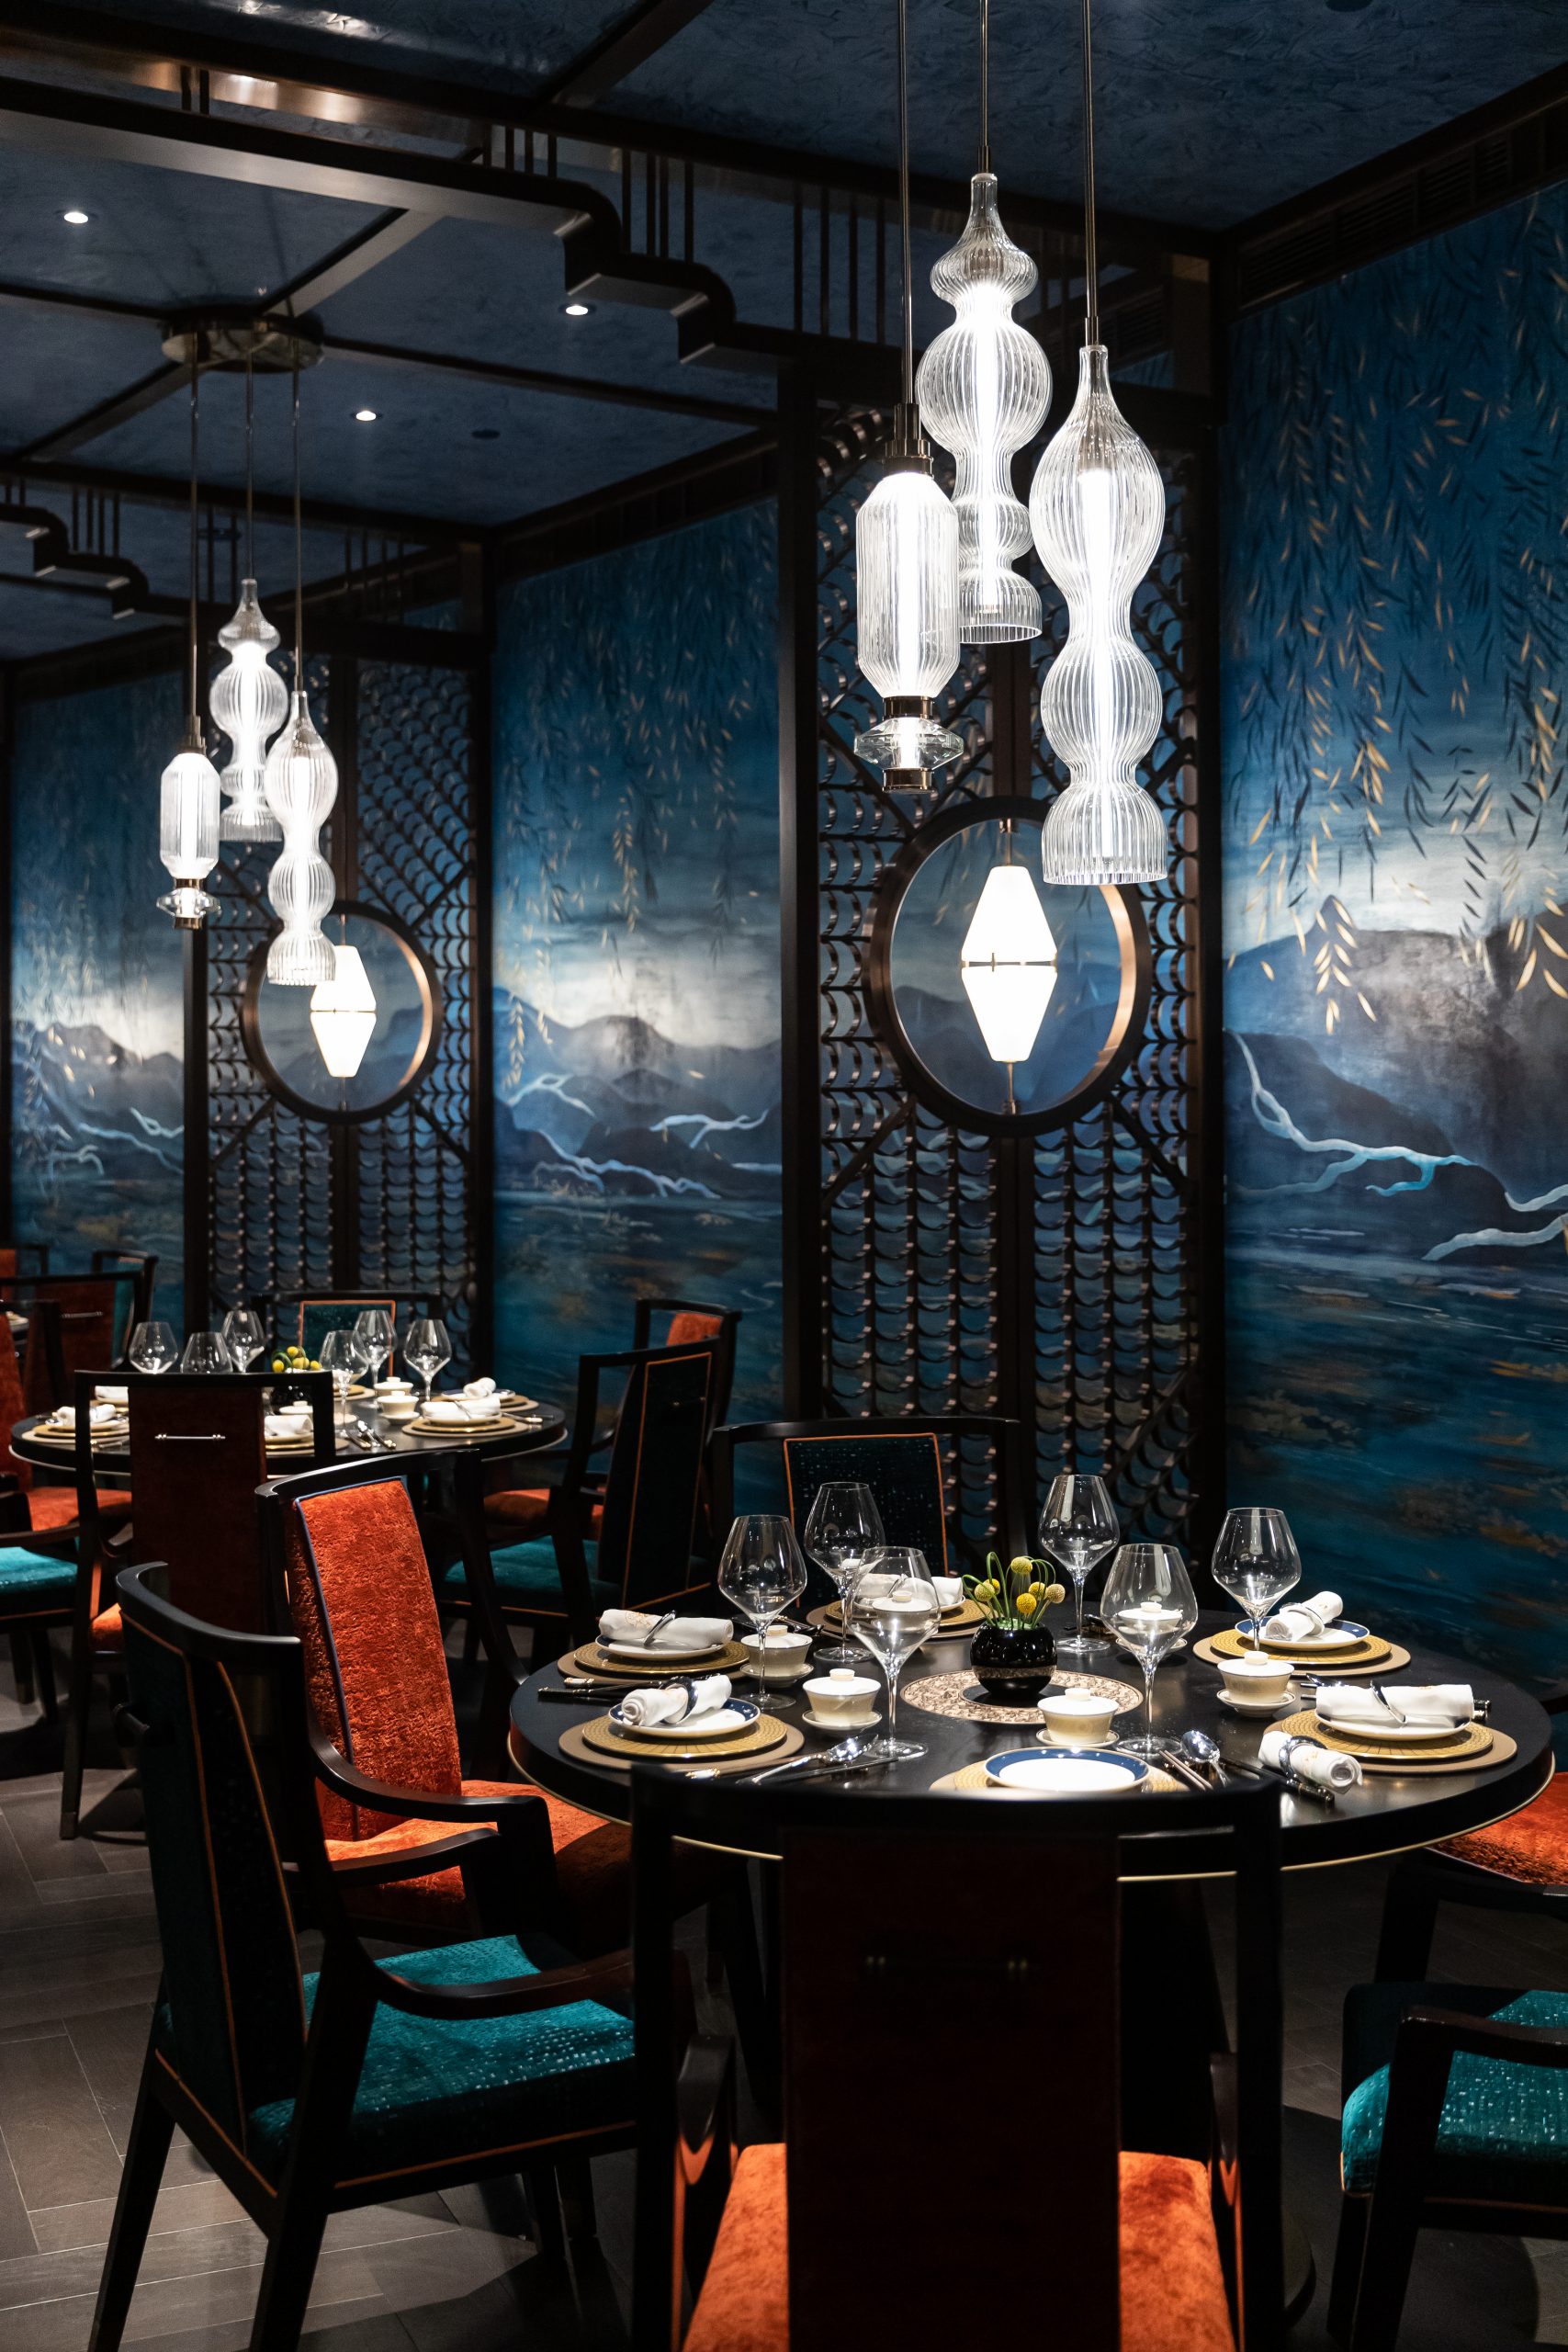 The Huaiyang Garden restaurant interiors